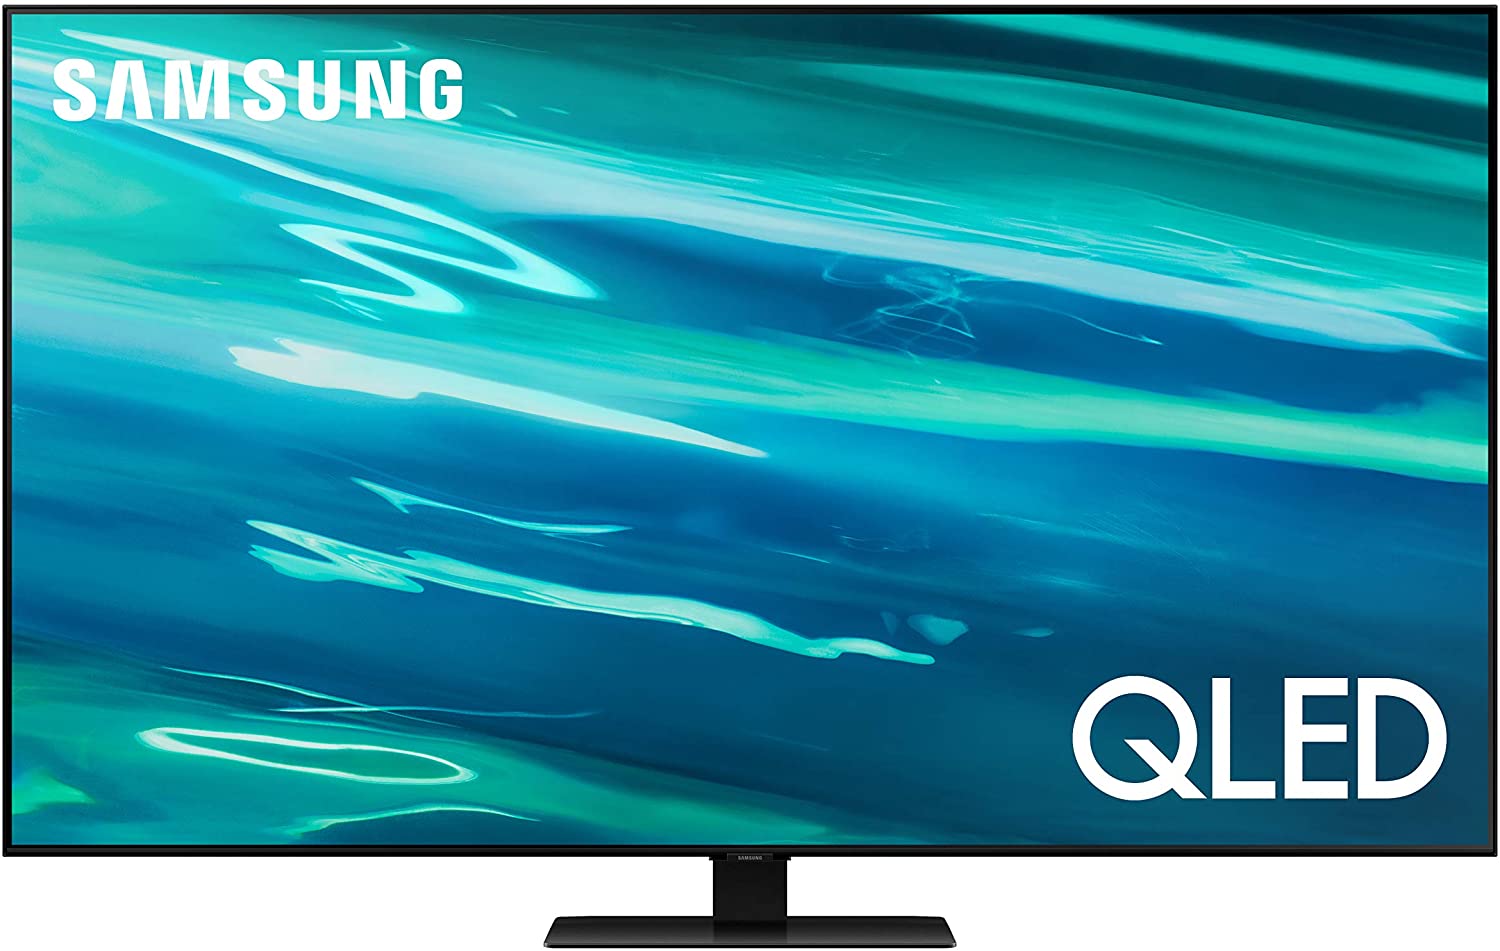 Samsung 55-inch QLED TV